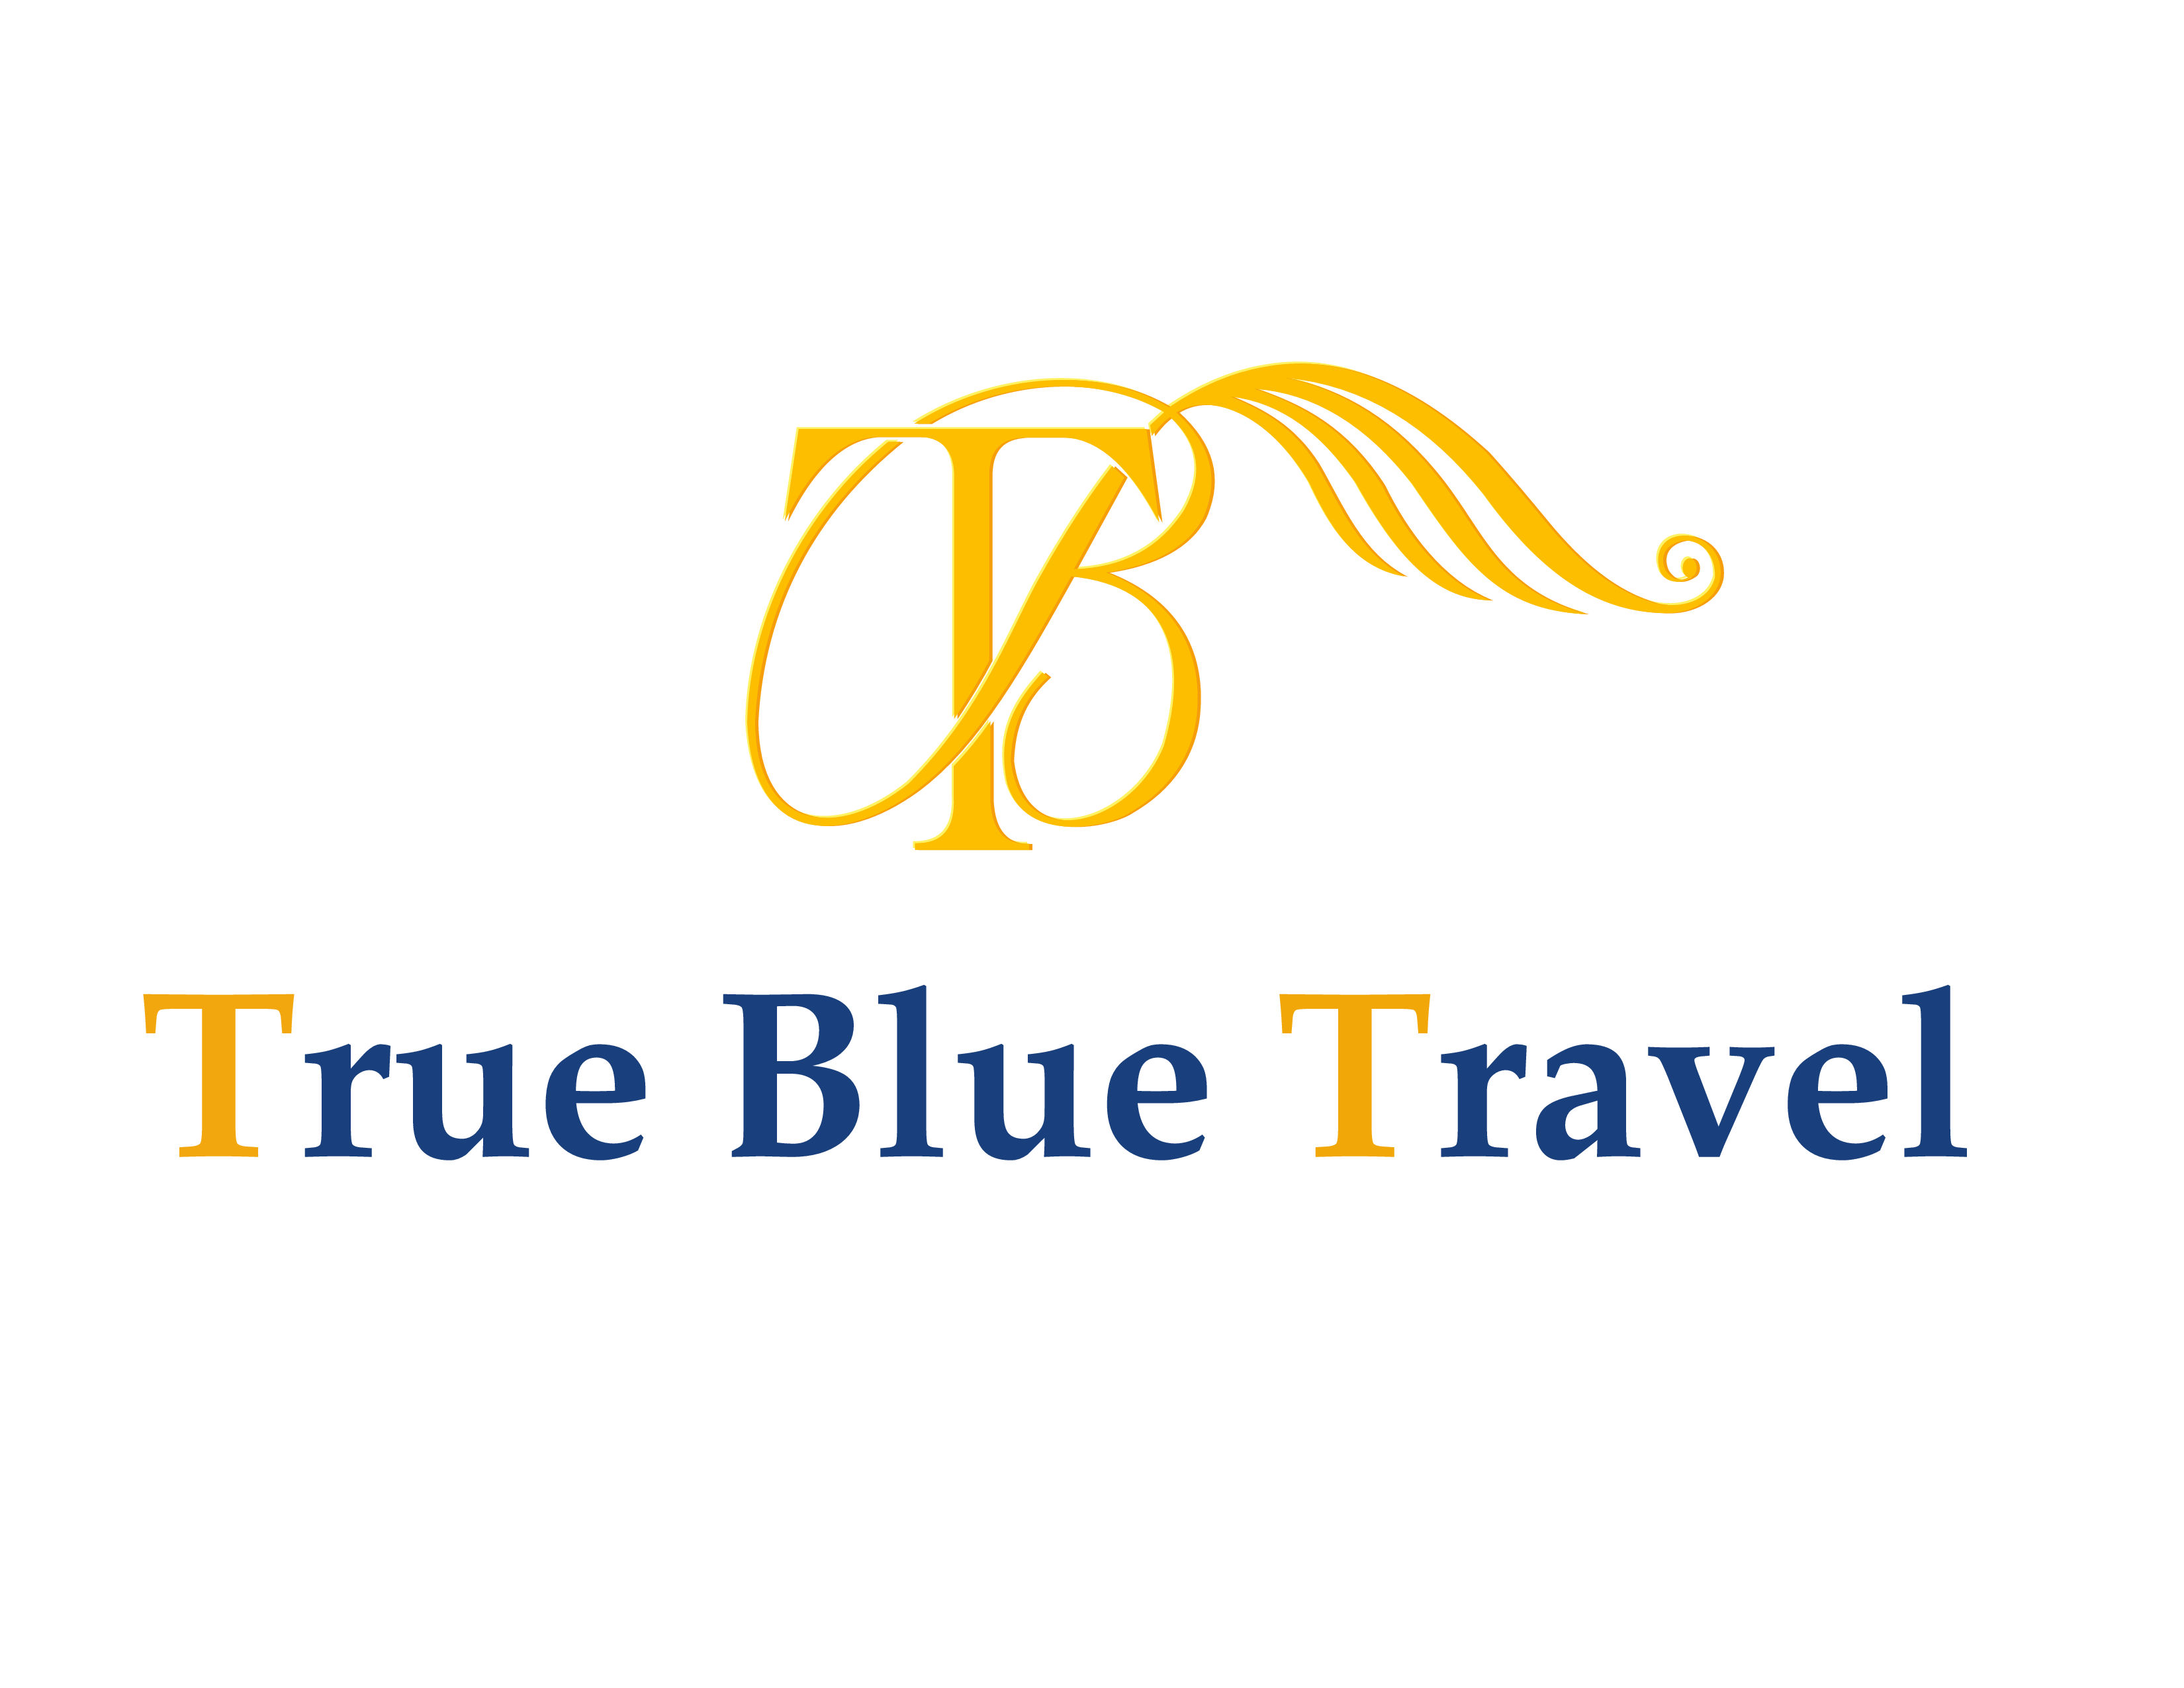 True Blue Travel